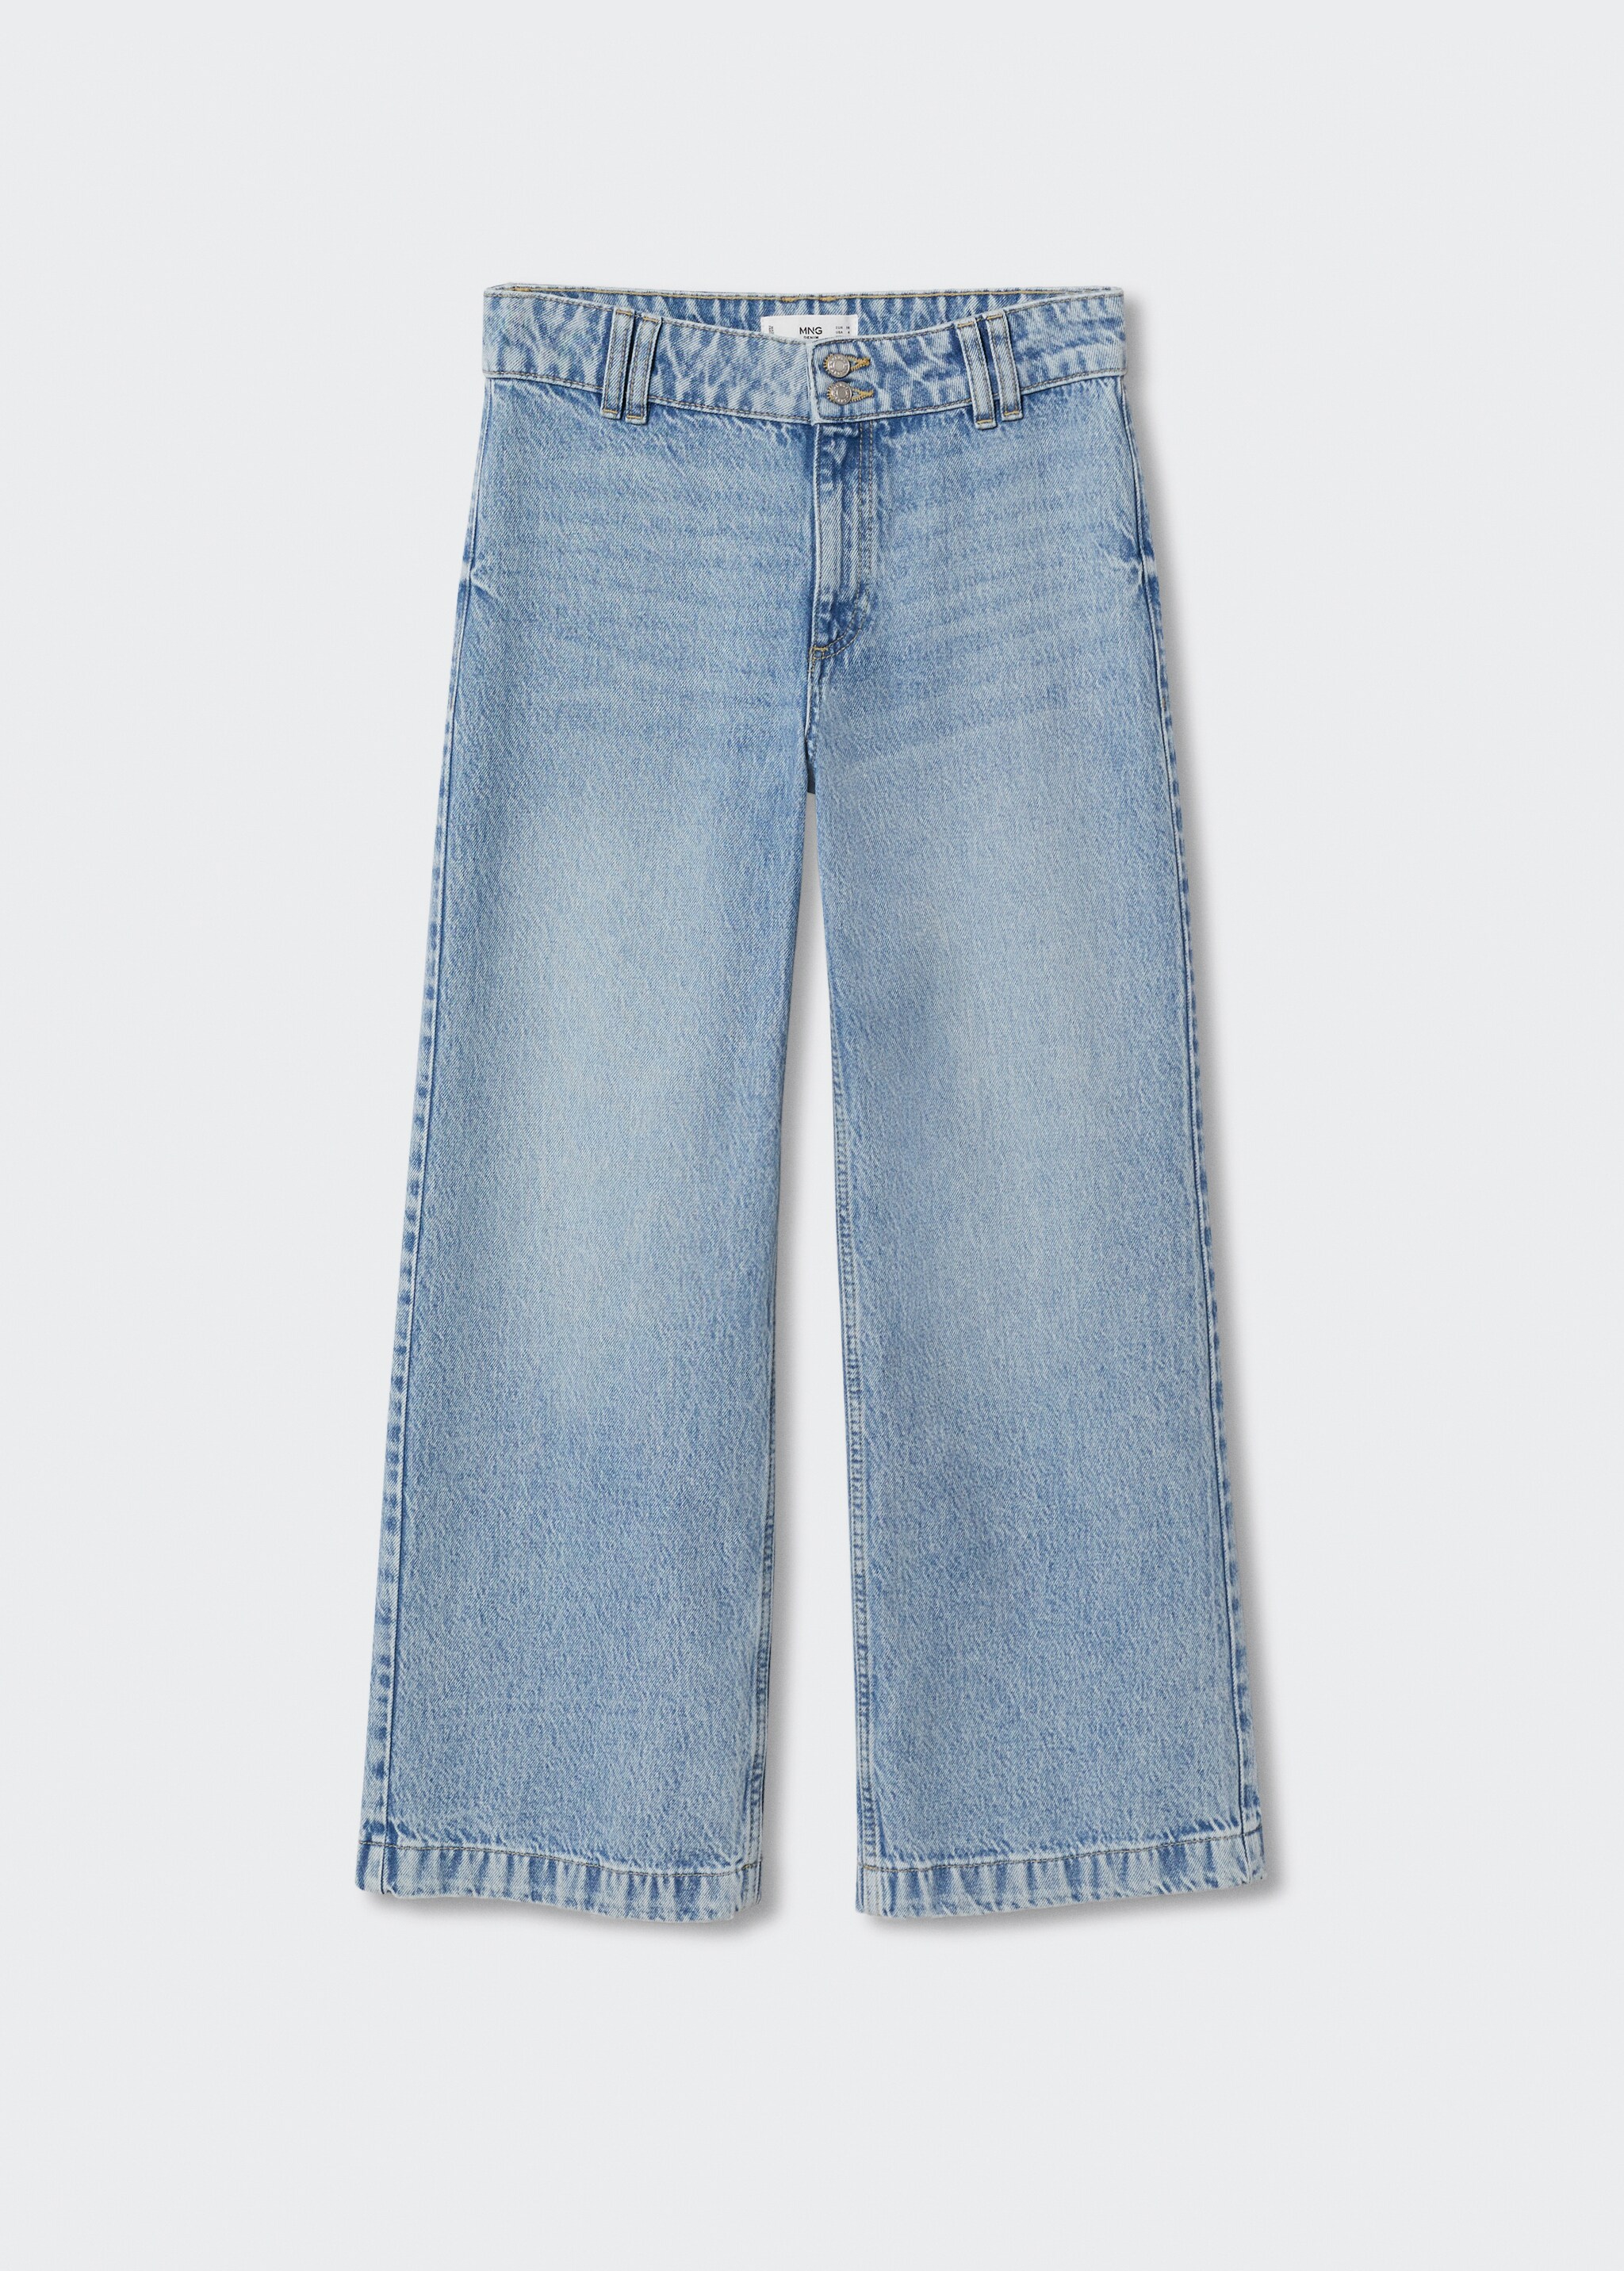 Jeans tiro medio Wideleg - Artículo sin modelo